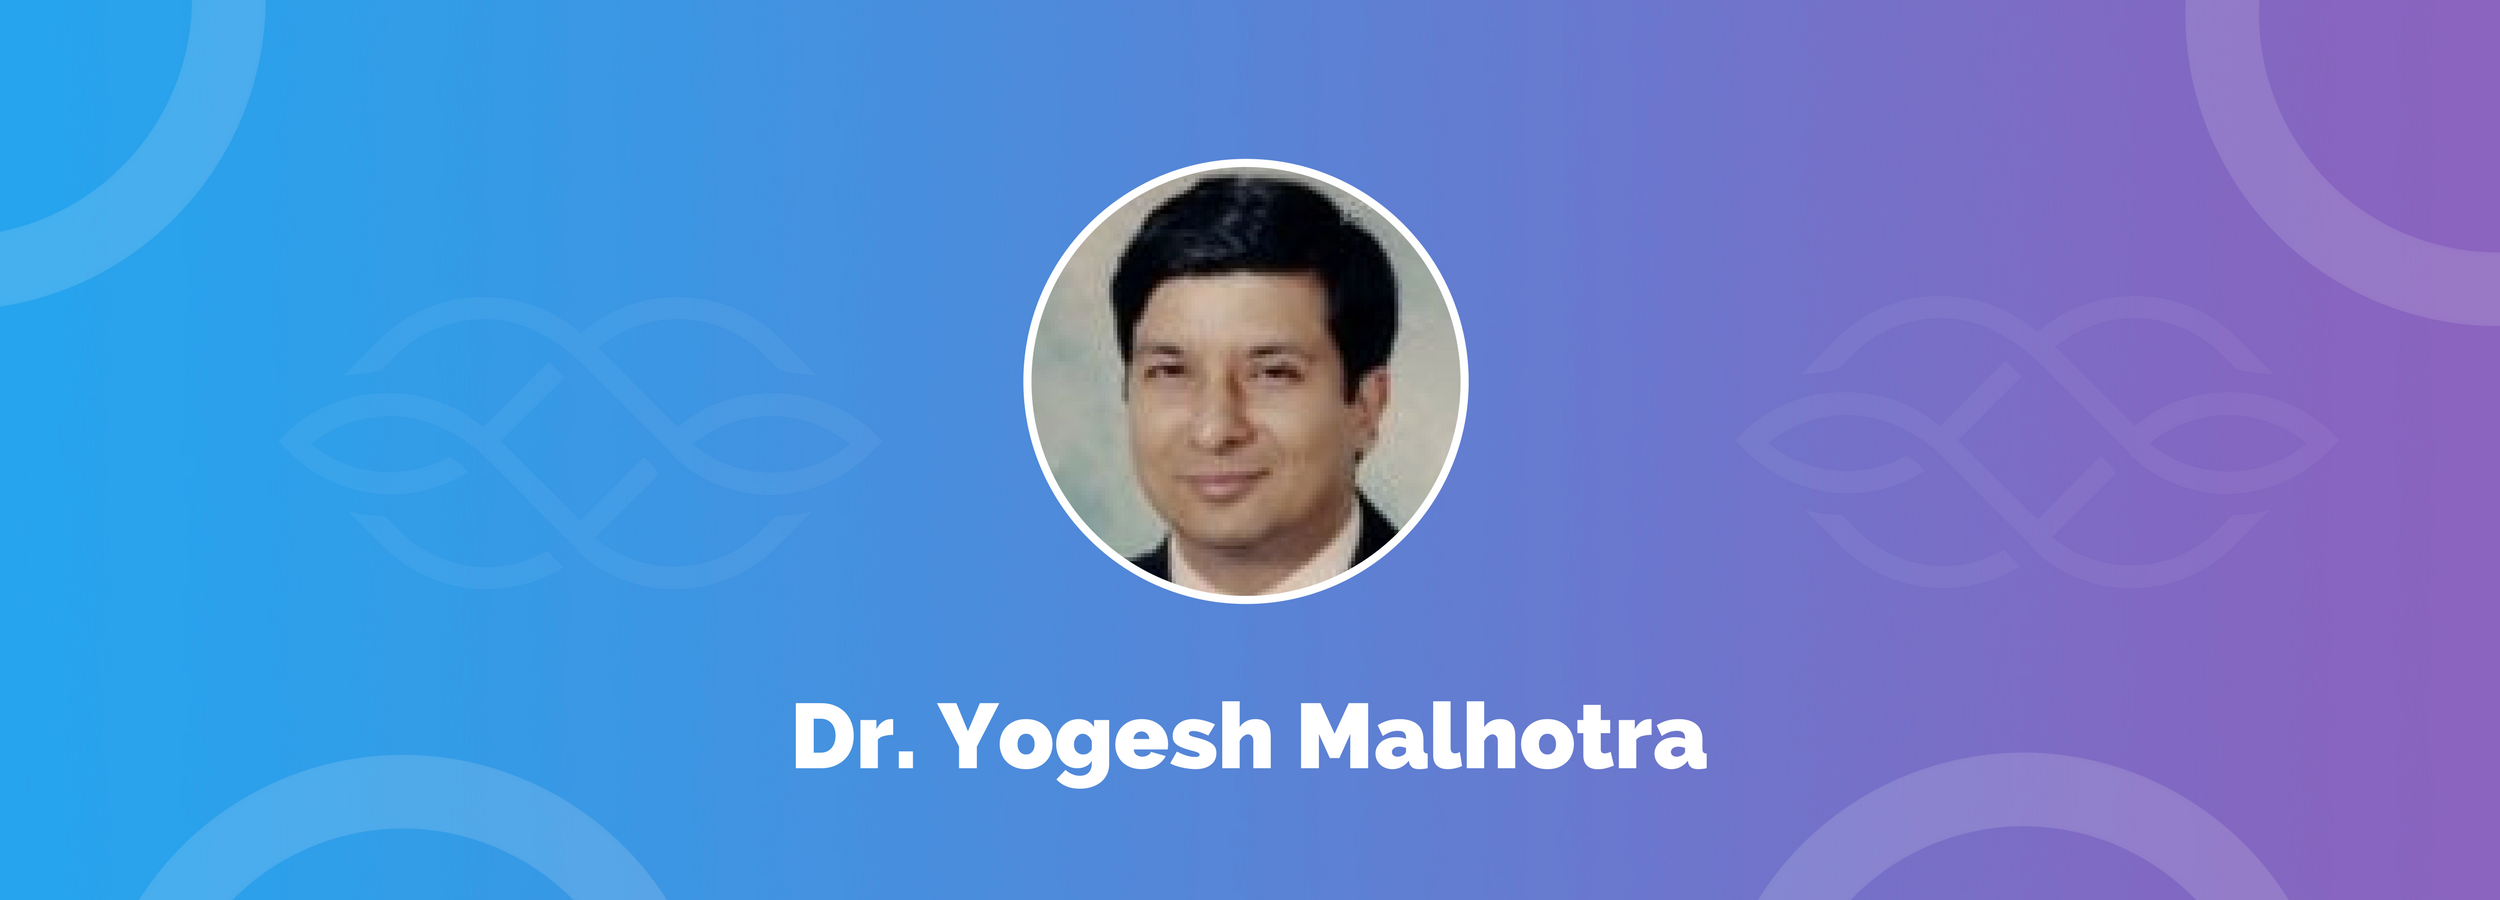 Welcome Dr. Yogesh Malhotra to IAGON’s Advisory Board